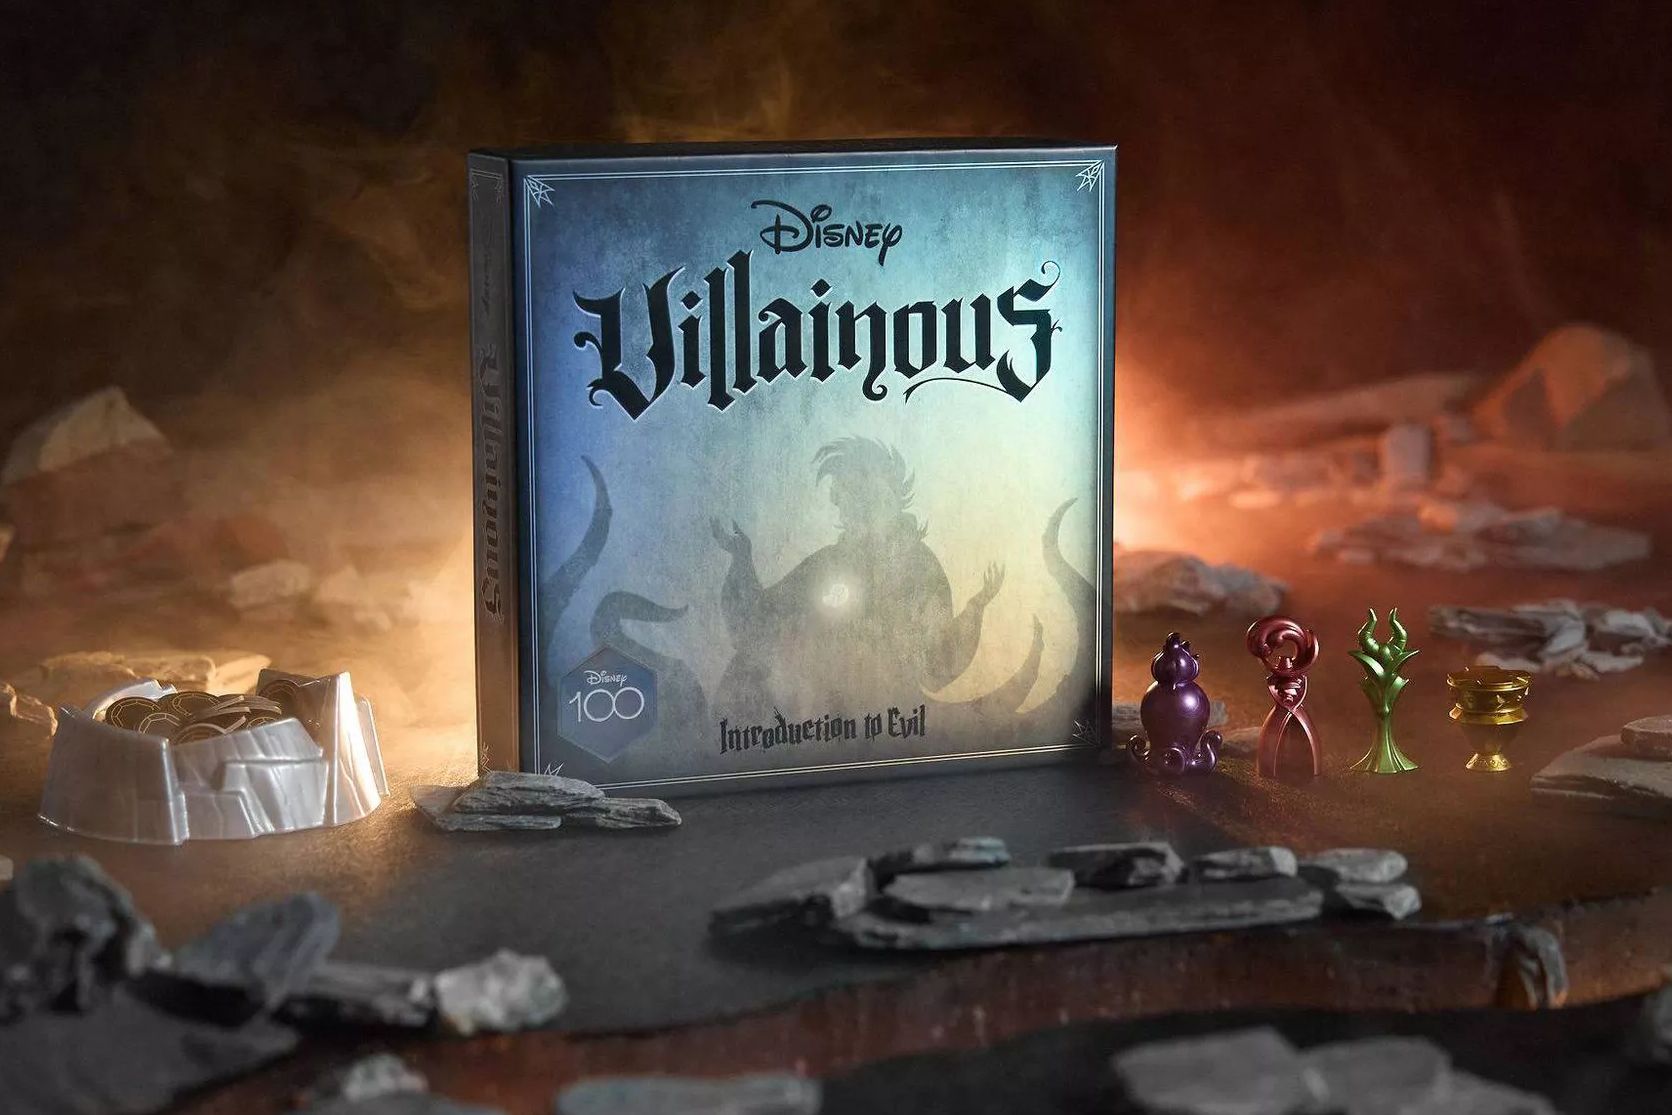 Disney Villainous: Introducción al Mal